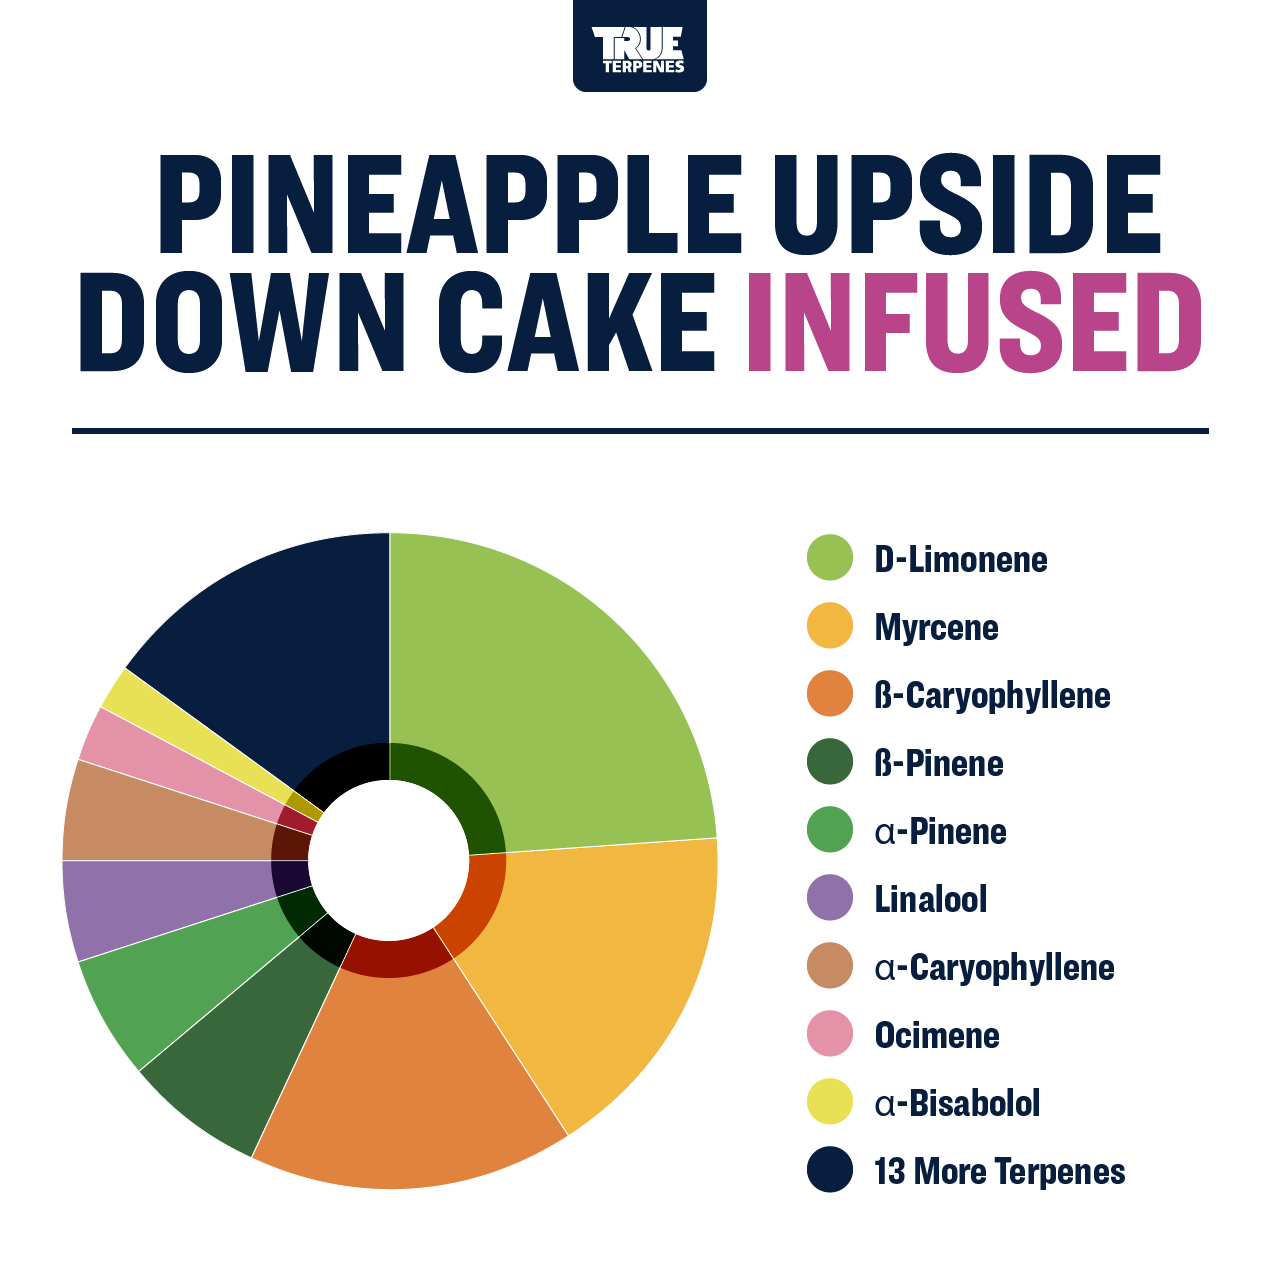 Pineapple Upside Down Cake Profile - Infused